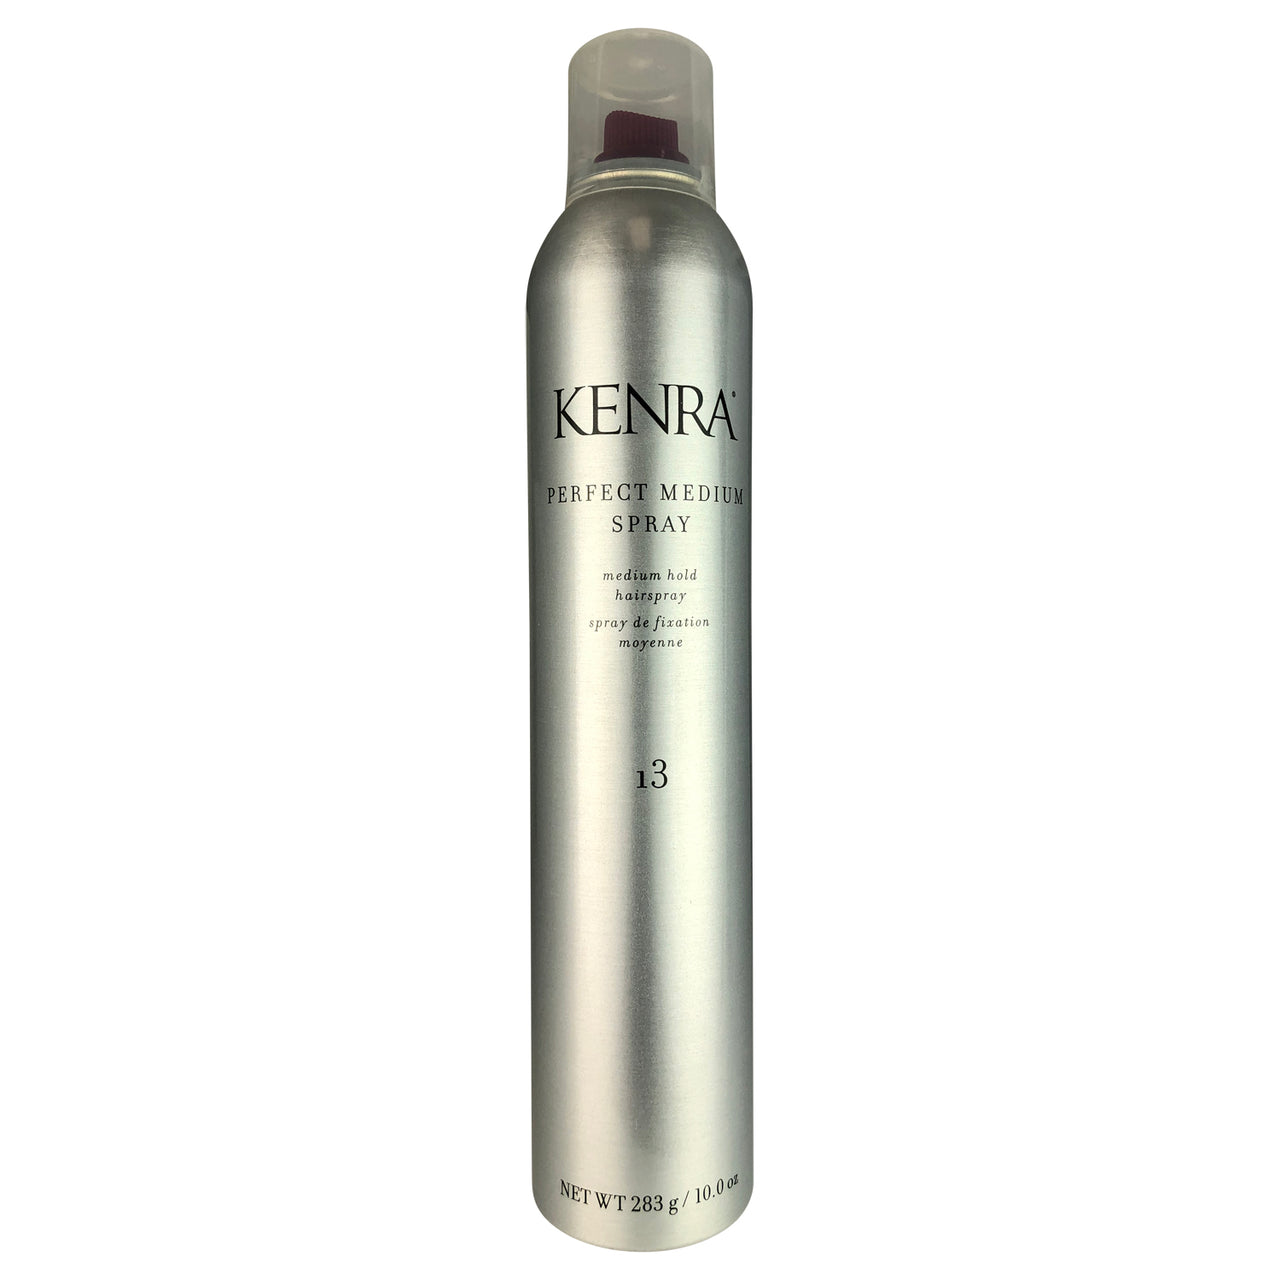 Kenra Perfect Medium Spray Medium Hold Hair Spray #13 10.0 oz.